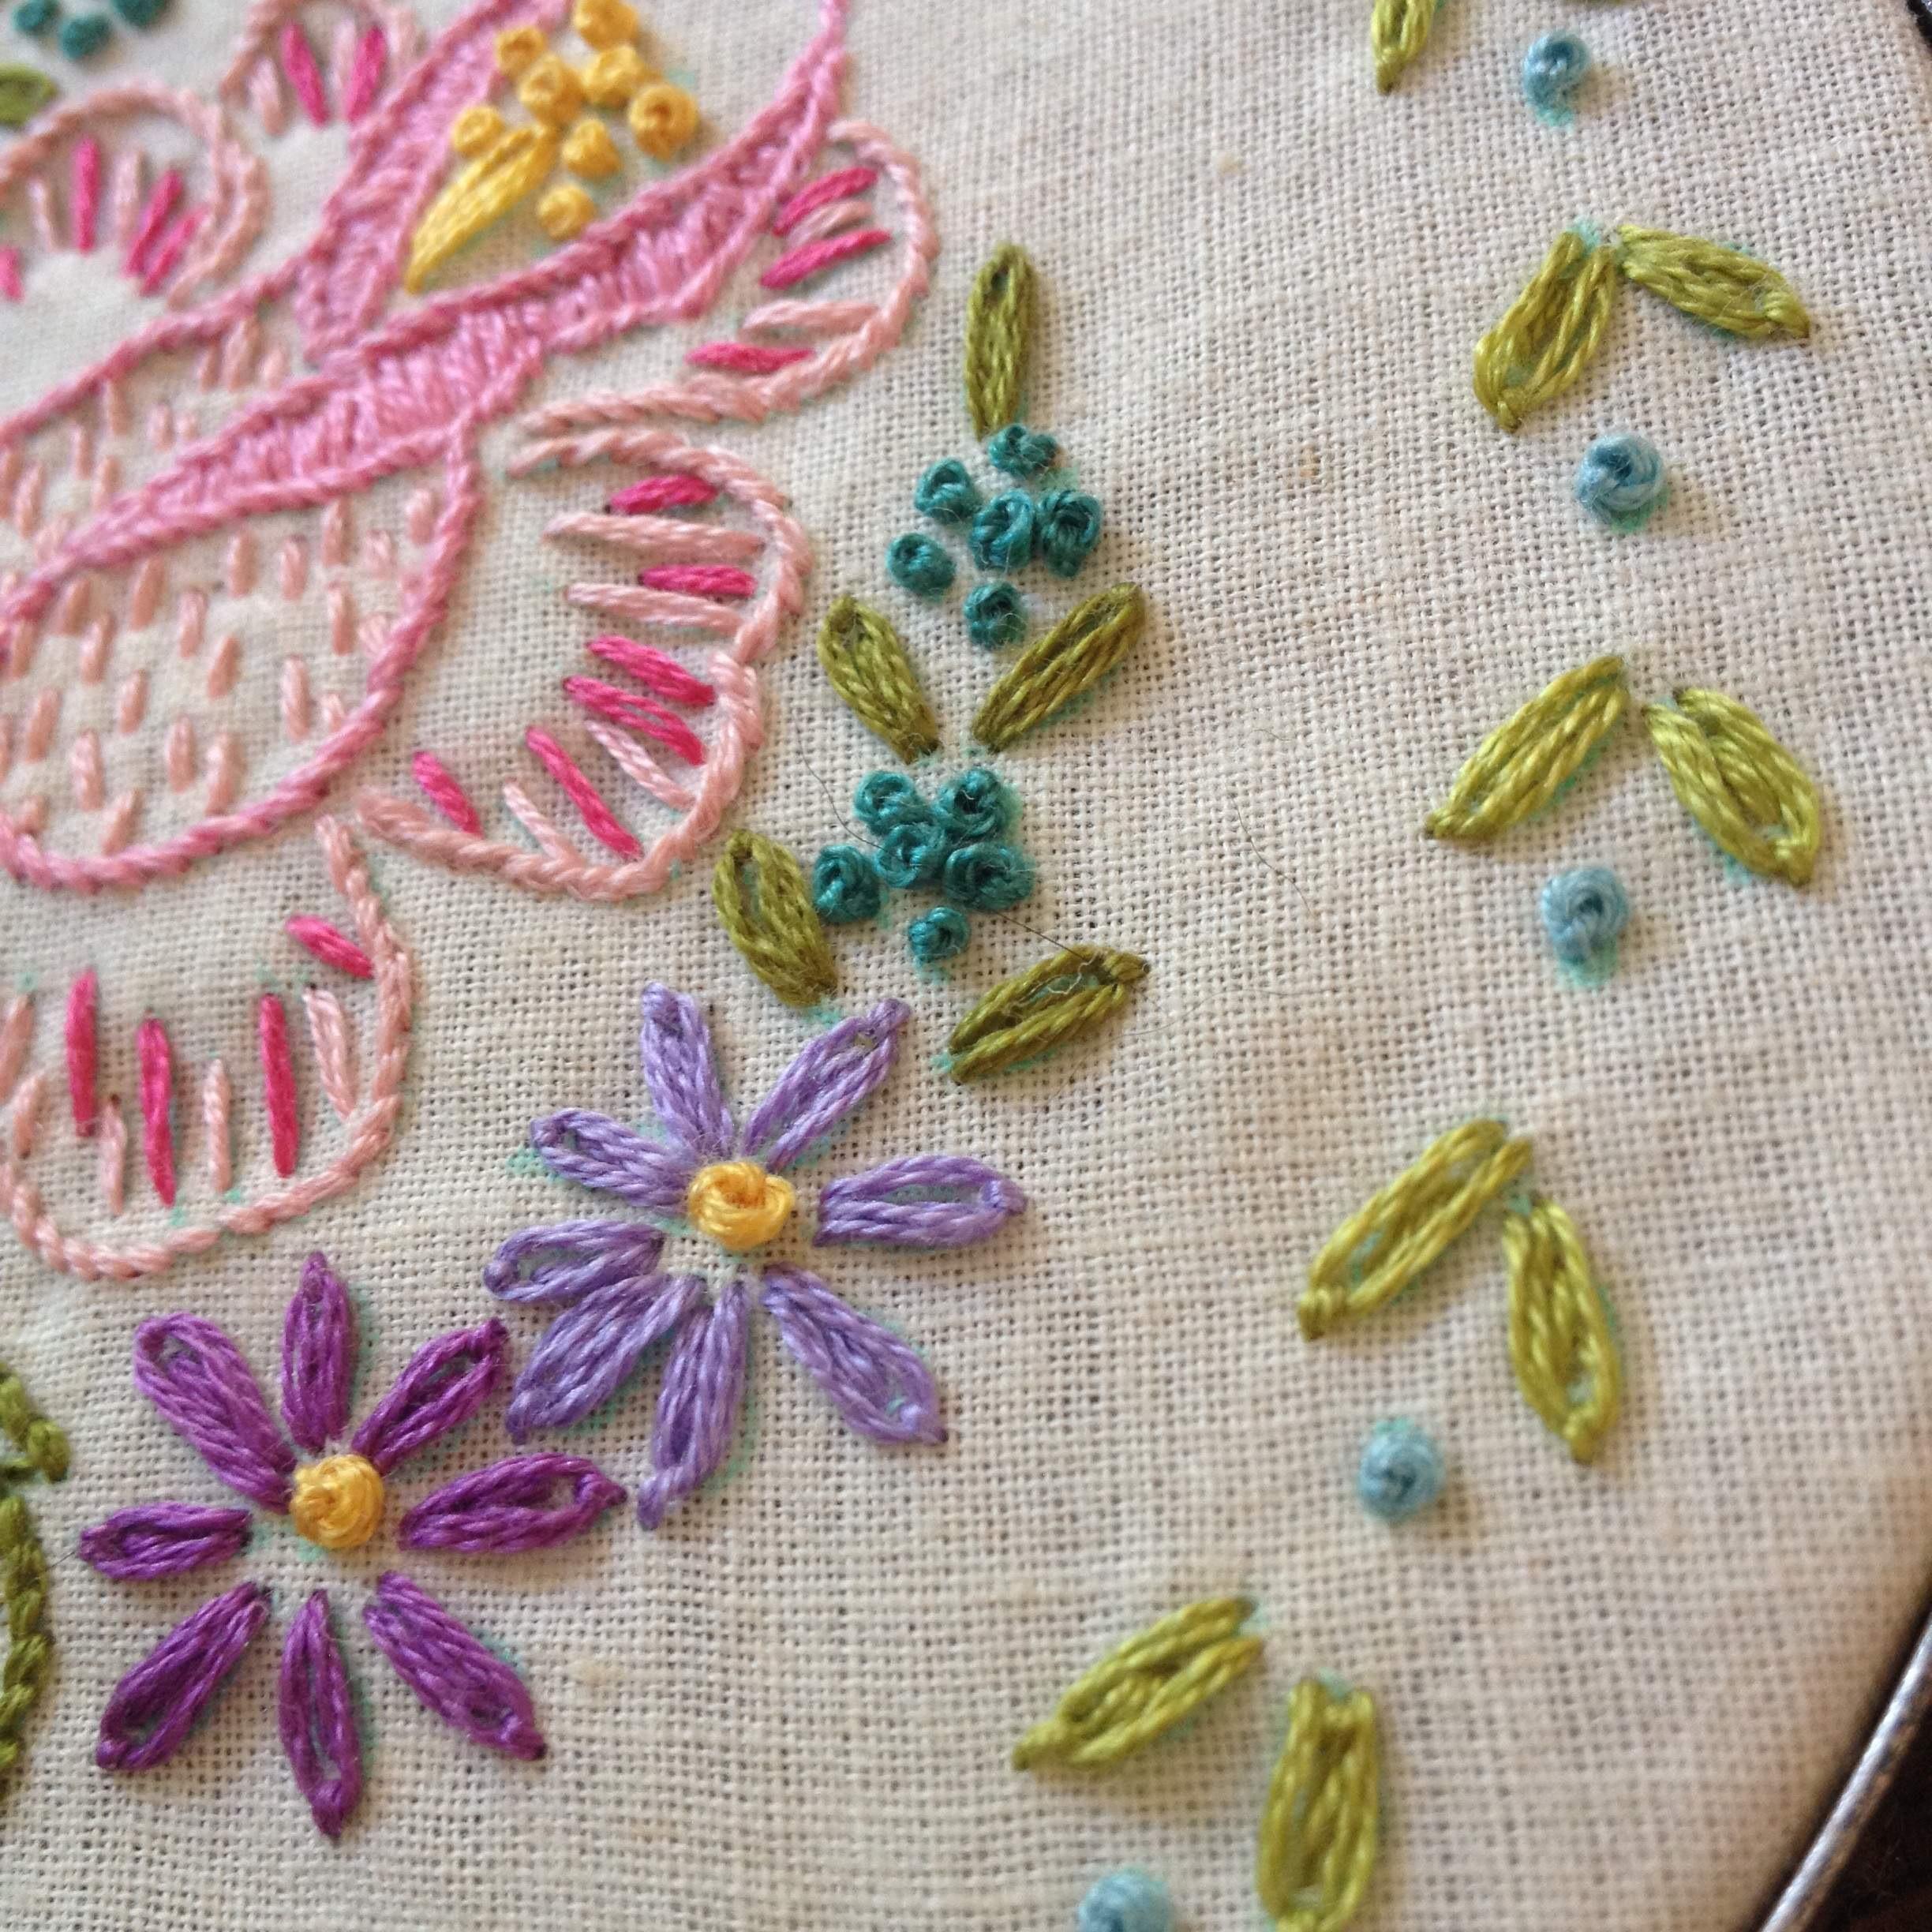 Vintage Hand Embroidery Patterns 40 Elegant 47 Inspired Hand Embroidery Patterns Collections